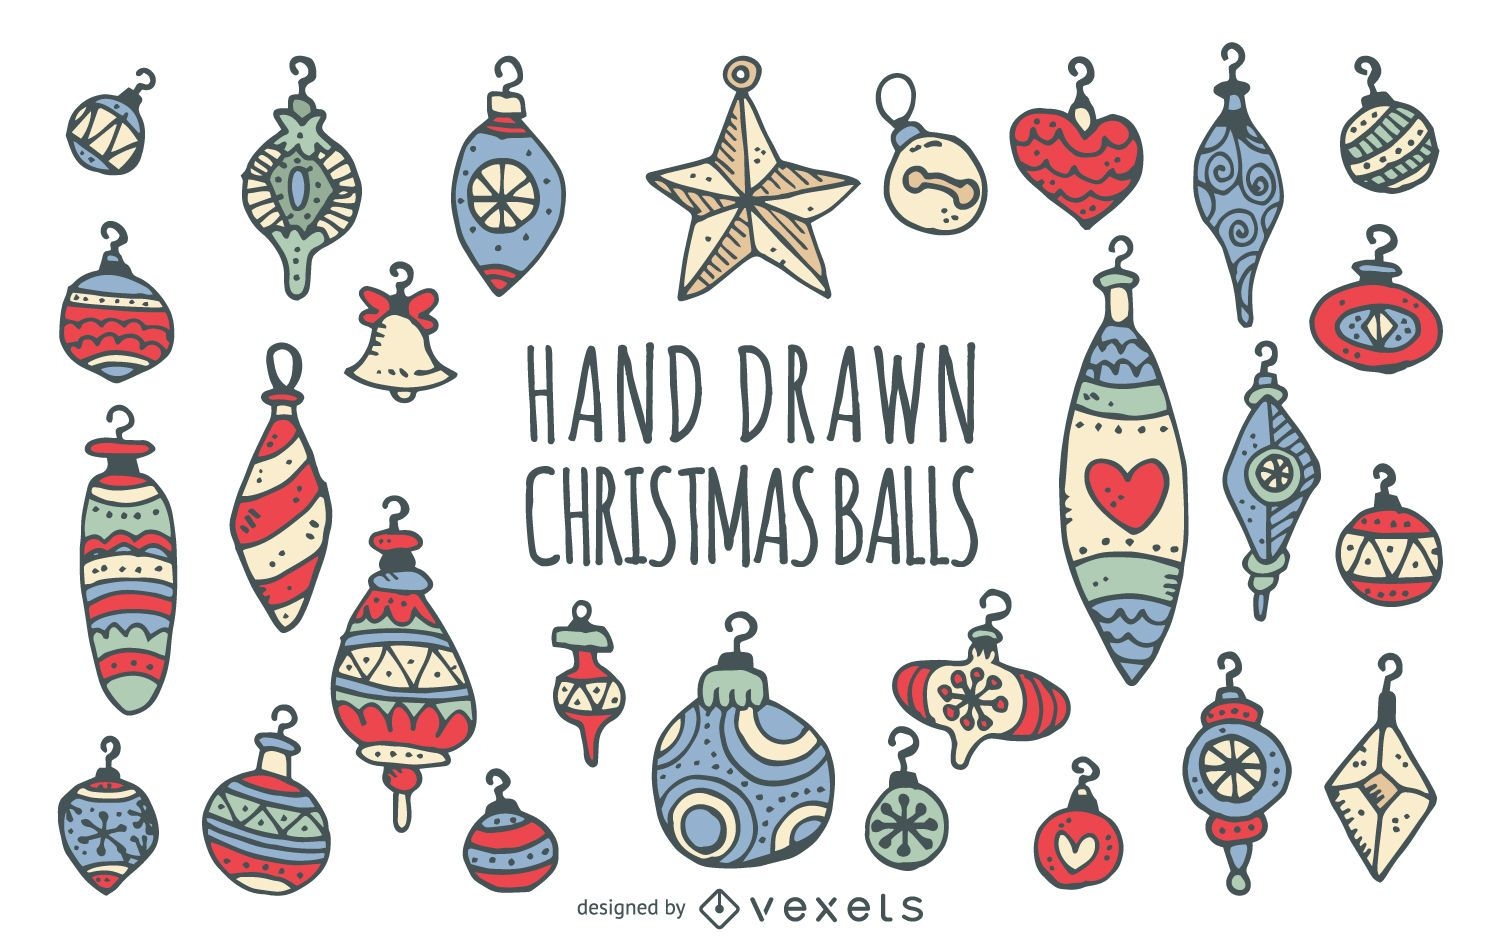 Doodled Christmas ornaments set